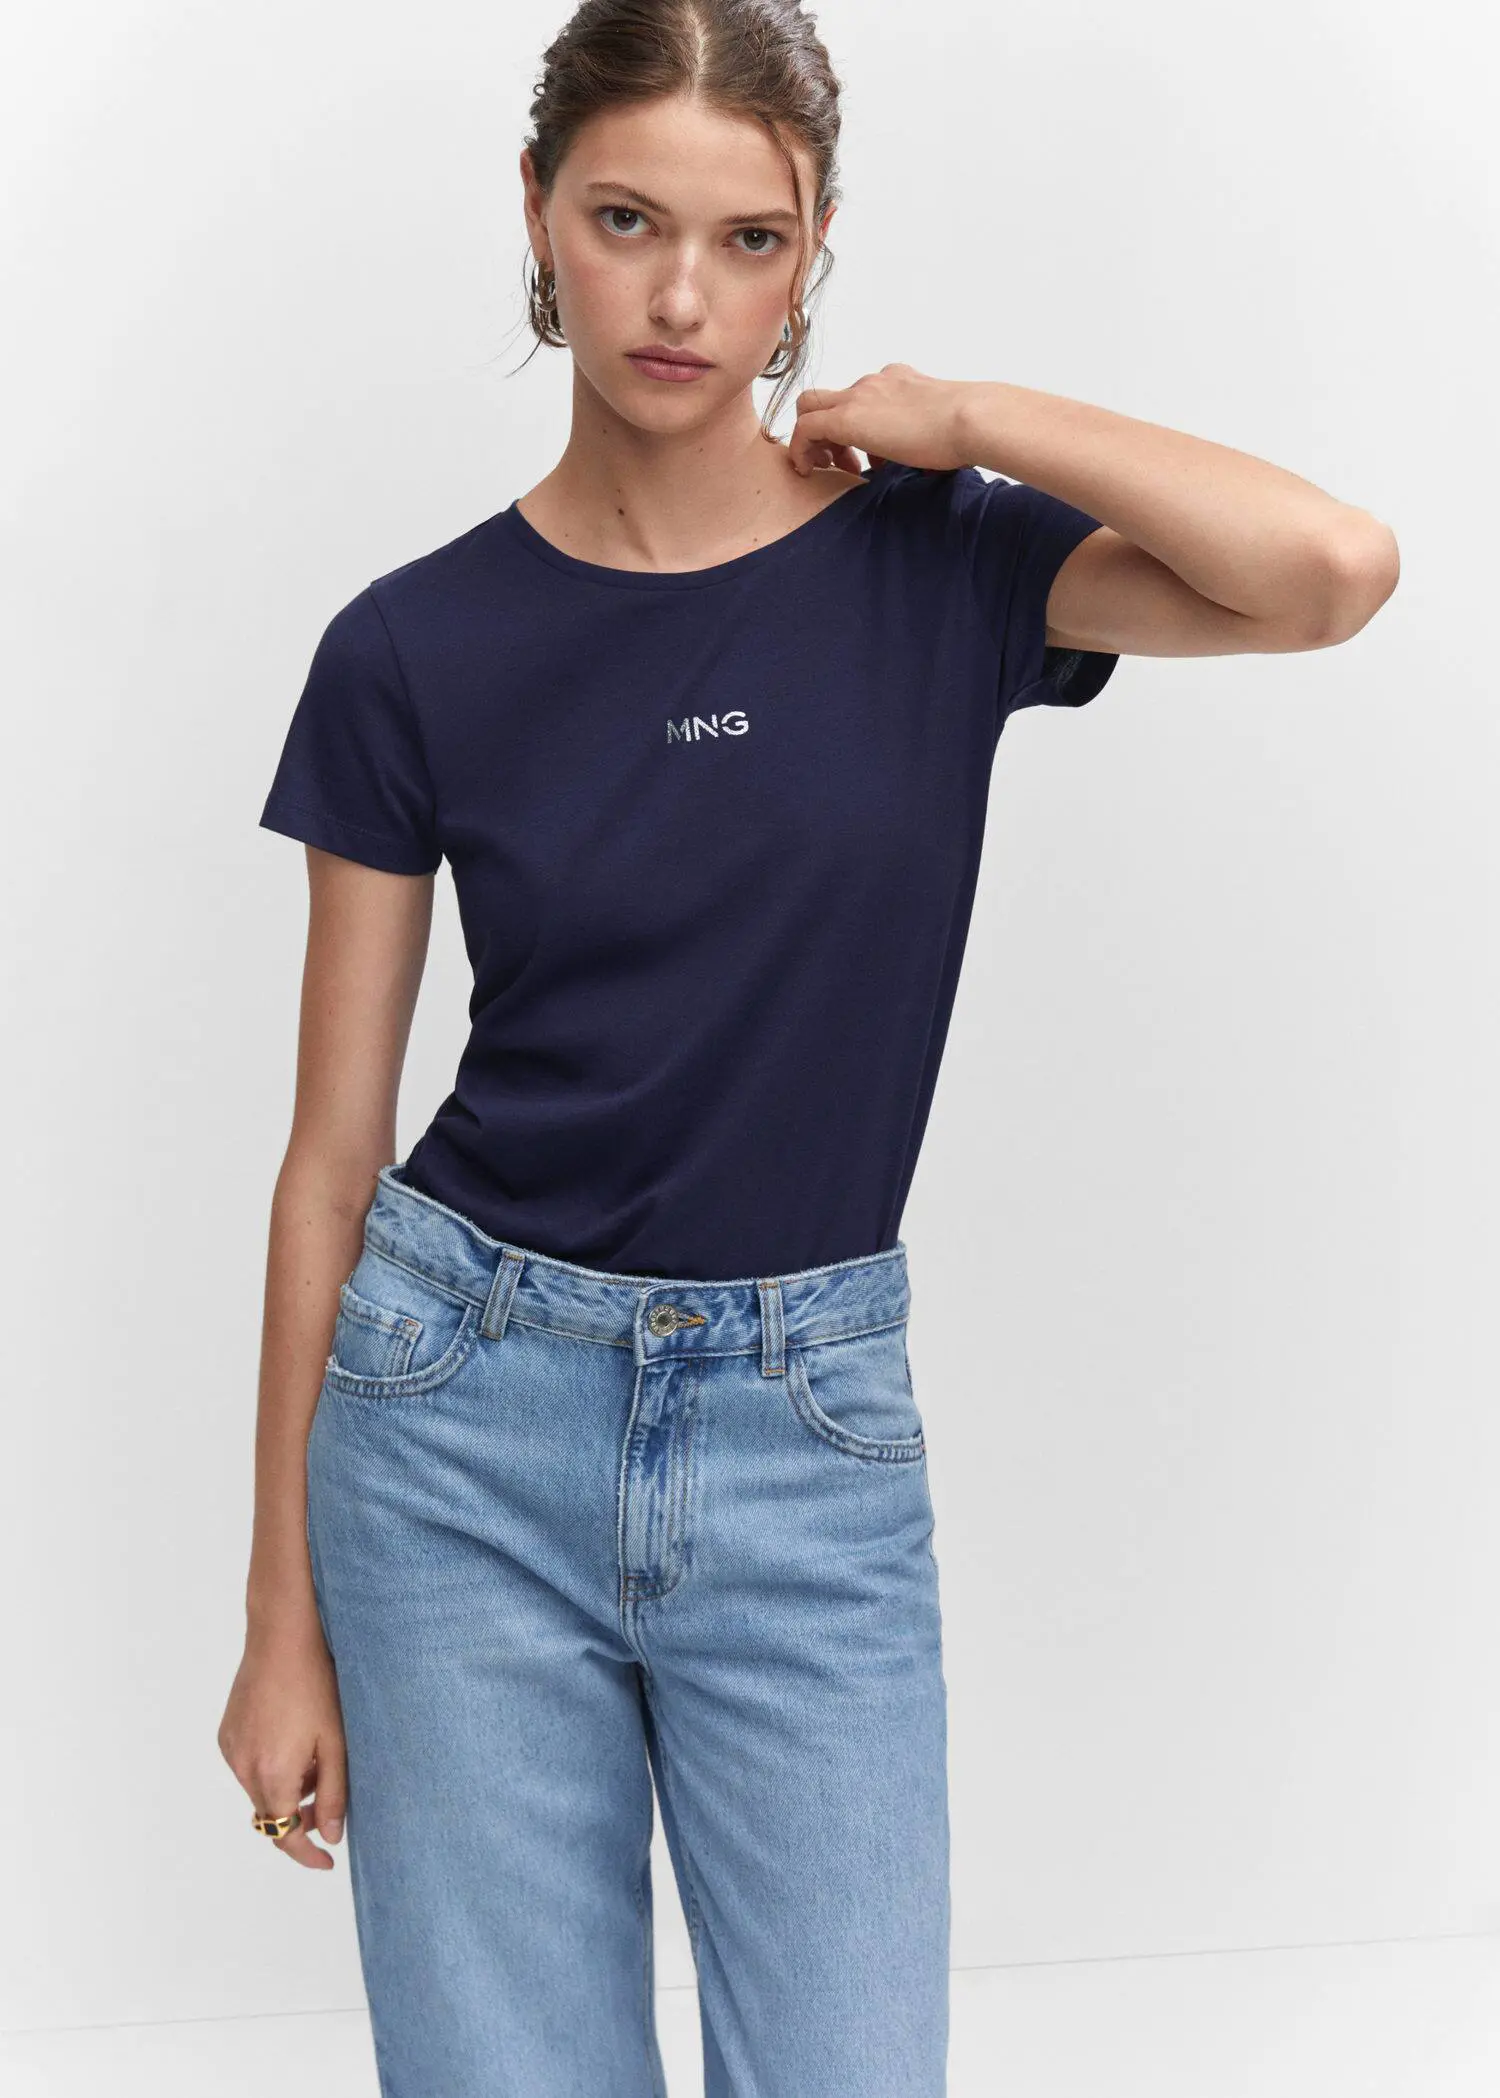 Mango Metallic logo T-shirt. a woman in blue jeans and a t-shirt 